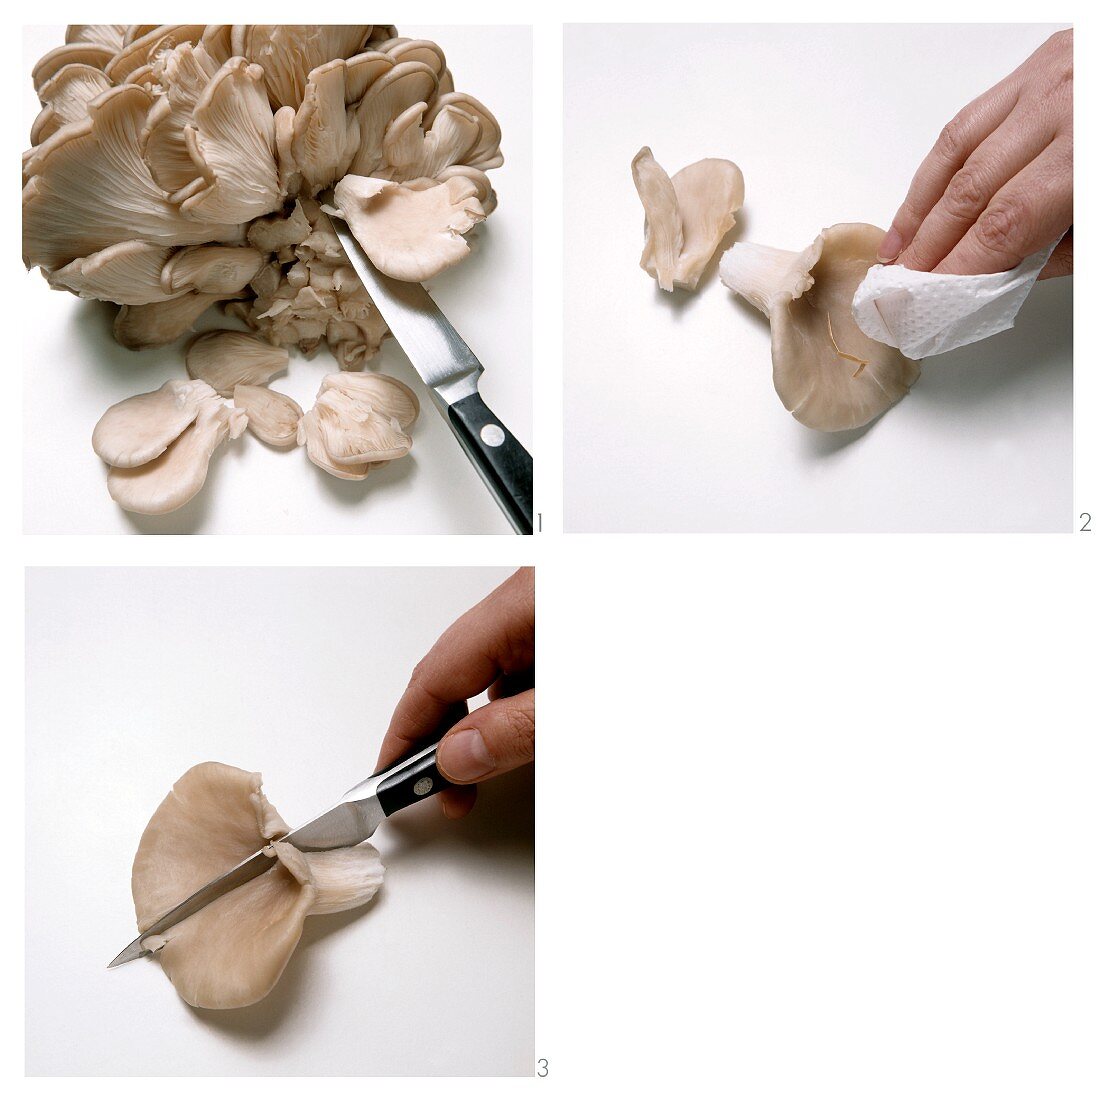 Preparing oyster mushrooms